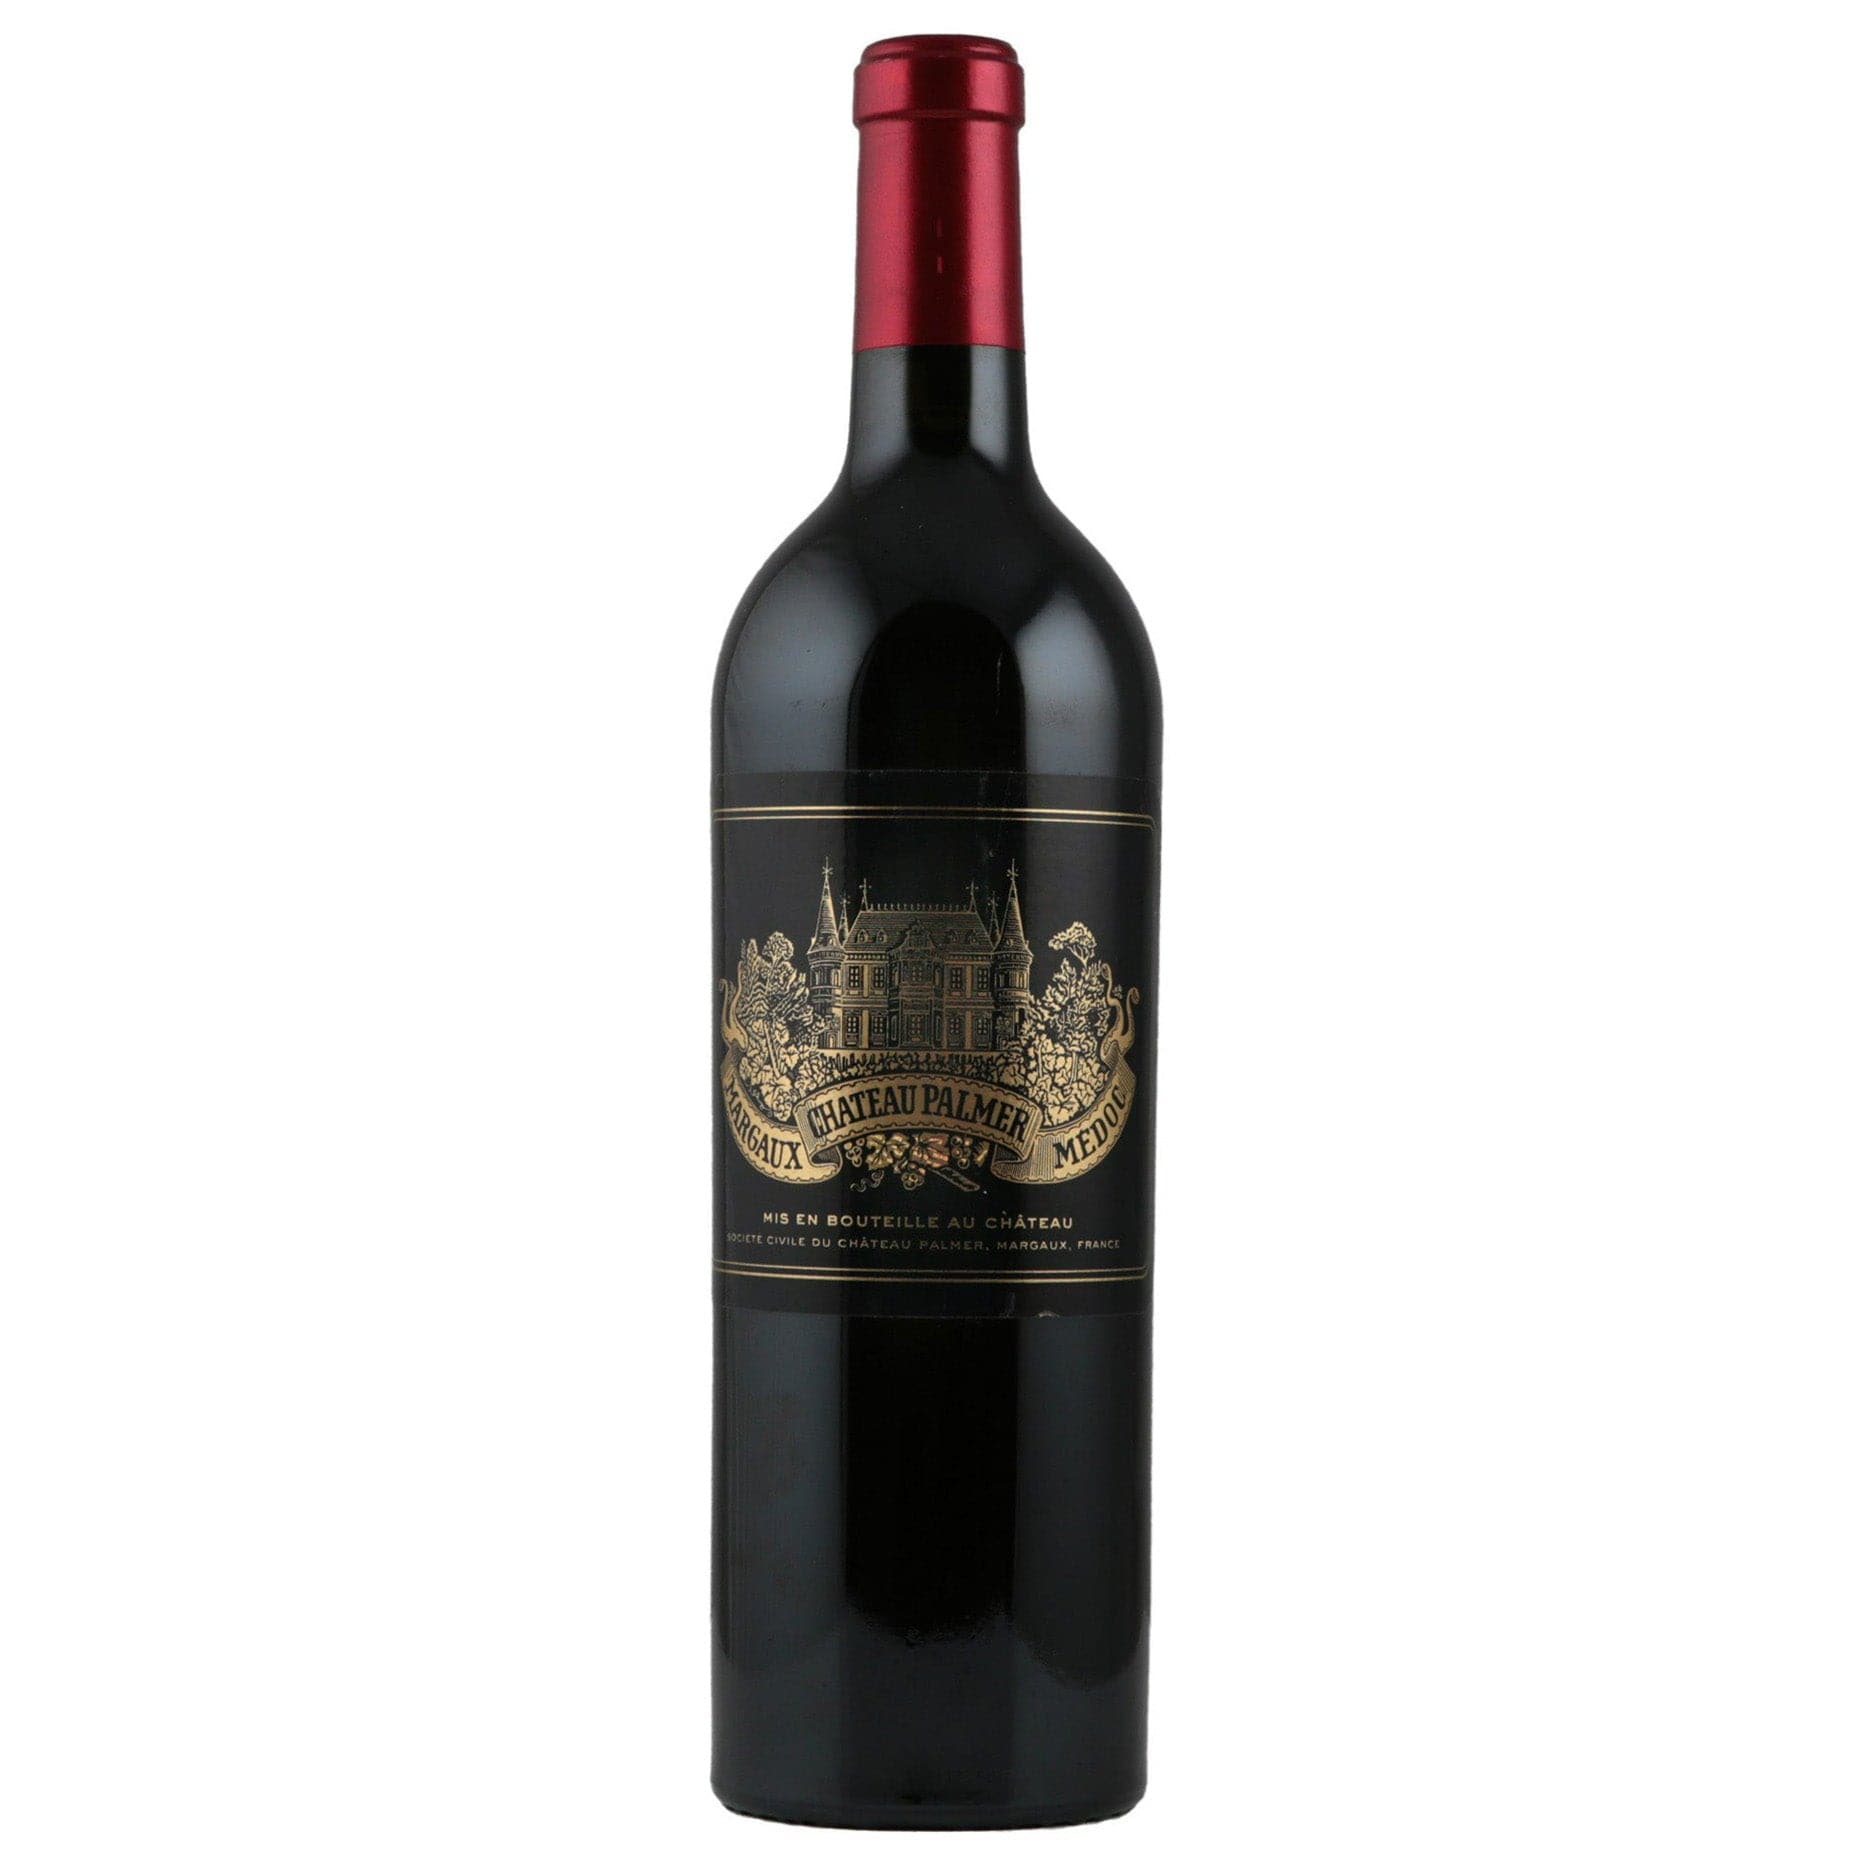 Single bottle of Red wine Ch. Palmer, 3rd Growth Grand Cru Classe, Margaux, 2009 52% Merlot, 41% Cabernet Sauvignon & 7% Petit Verdot